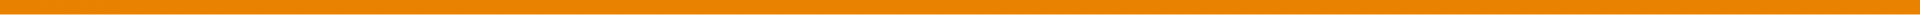 Orange Page Divider